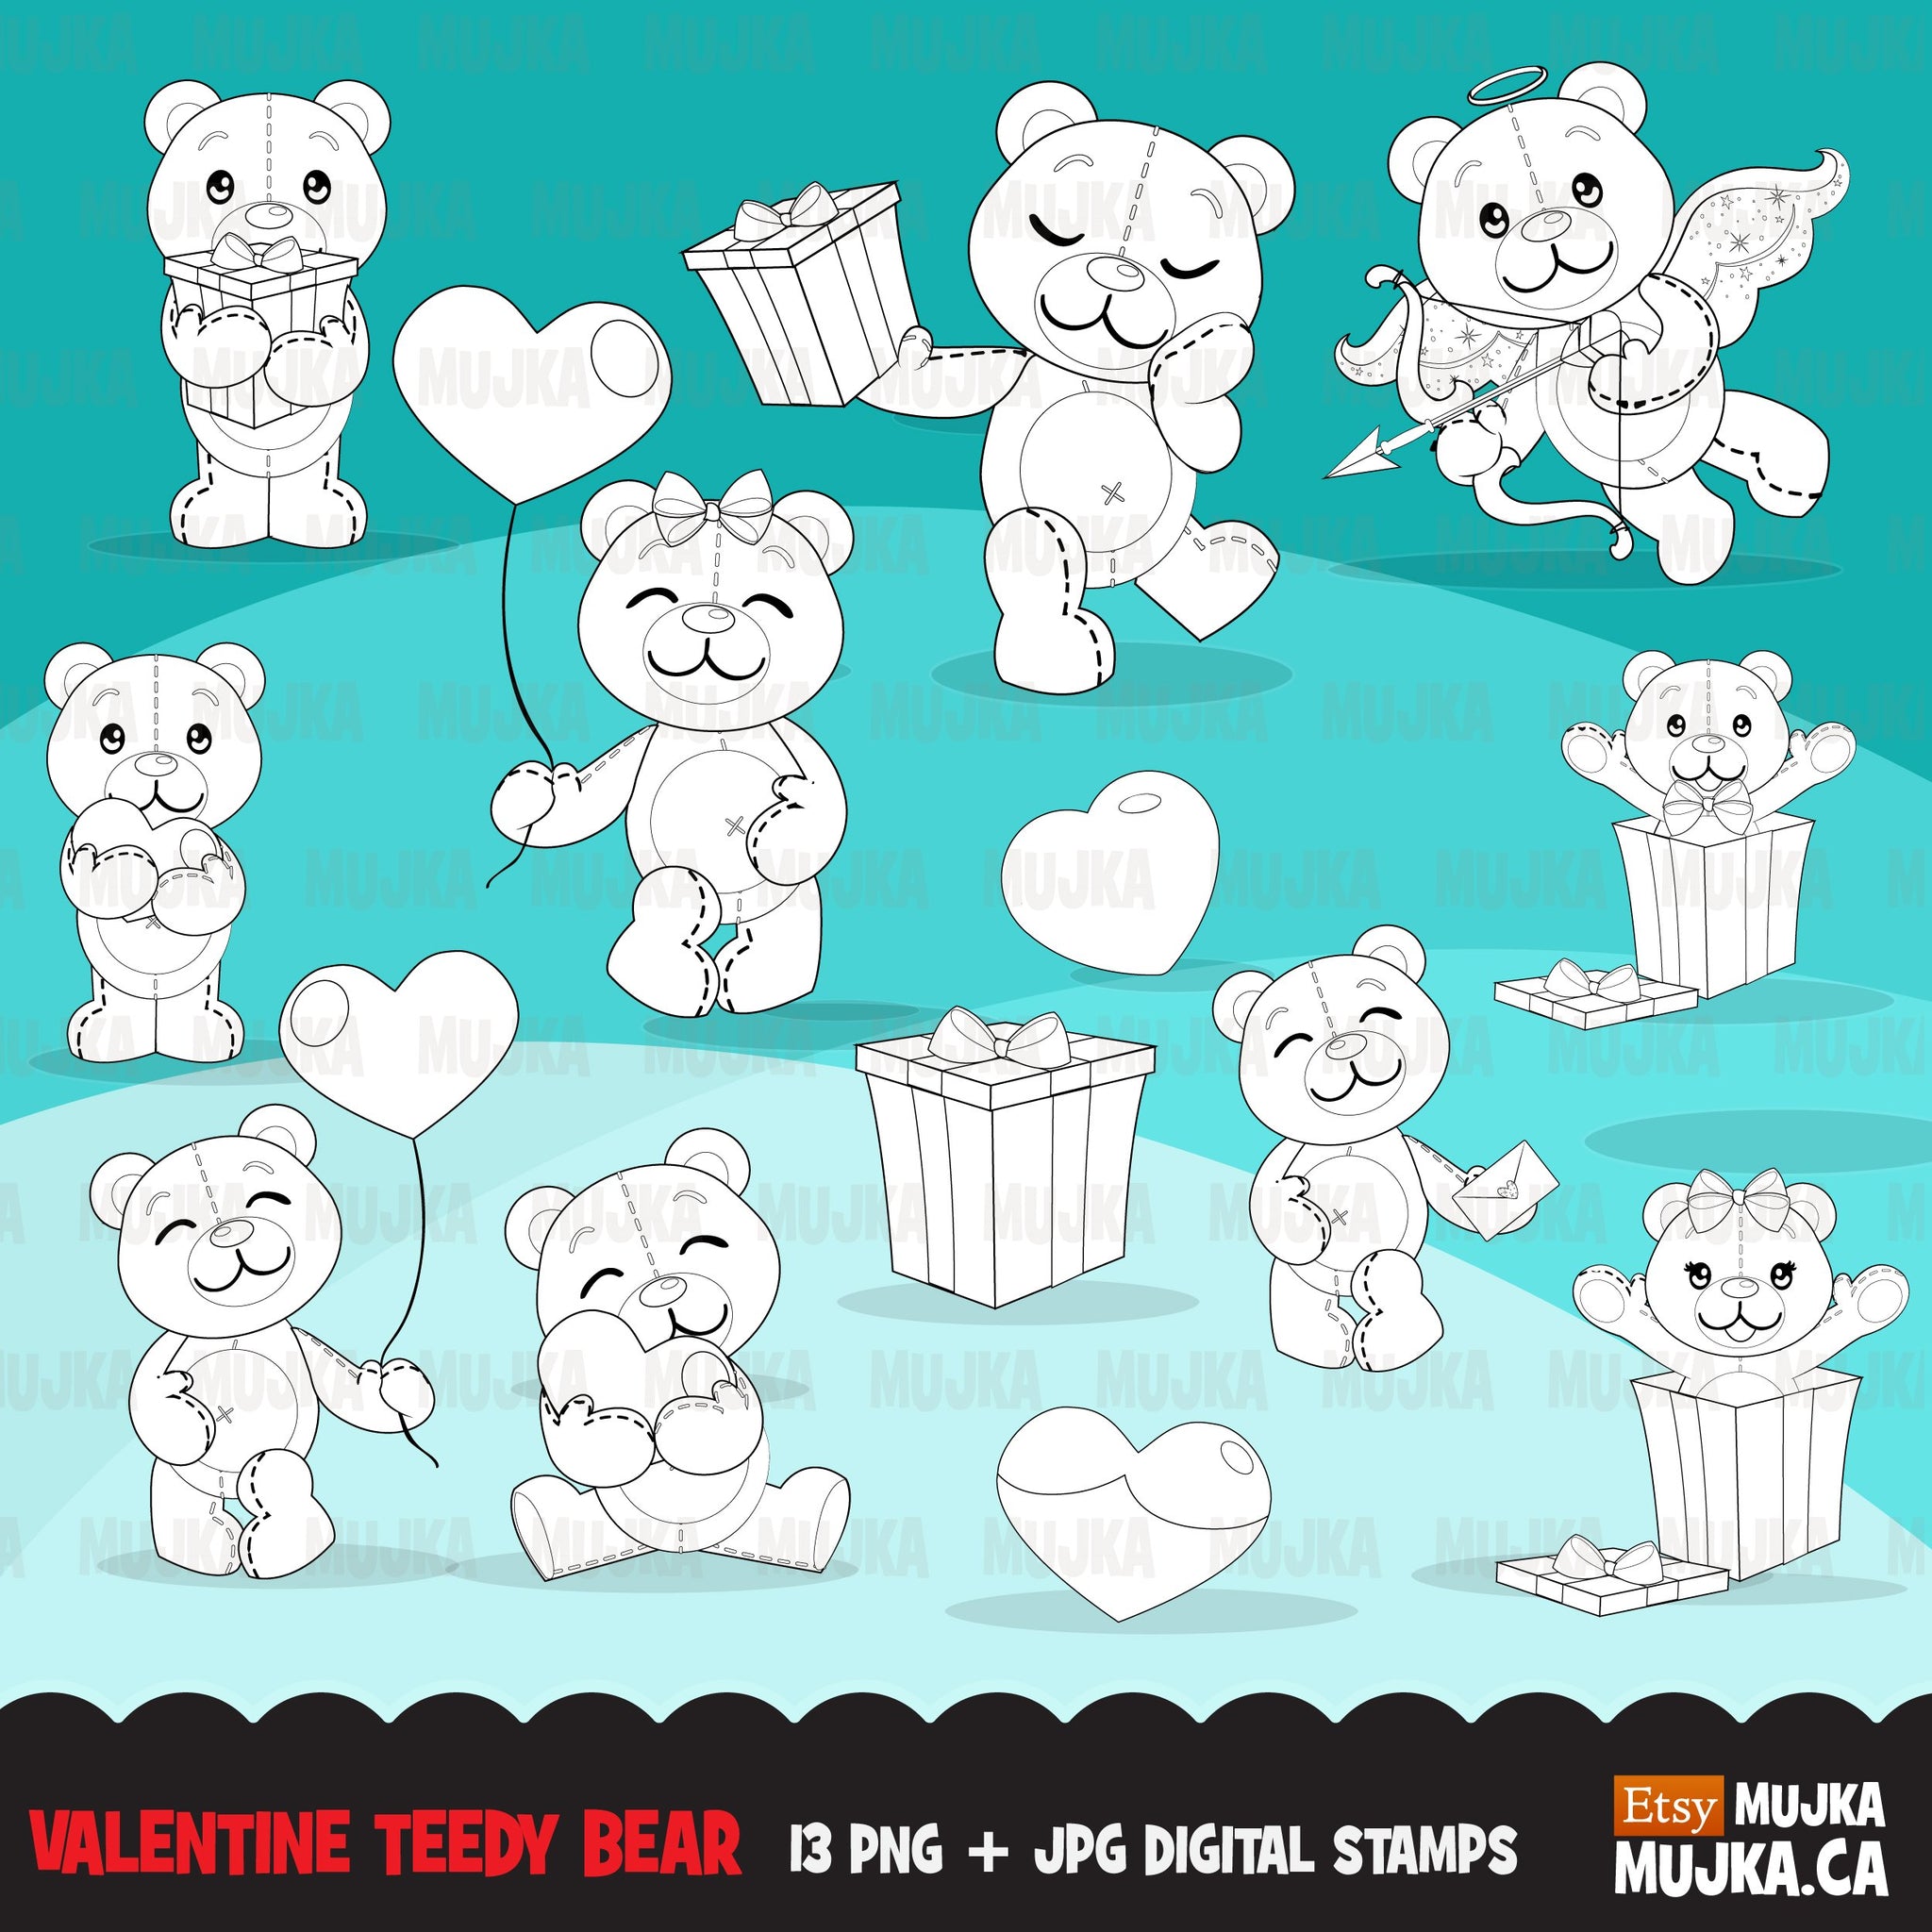 Valentine clipart Design Bundle V1, Cute celebration graphics, boys and girls, animals